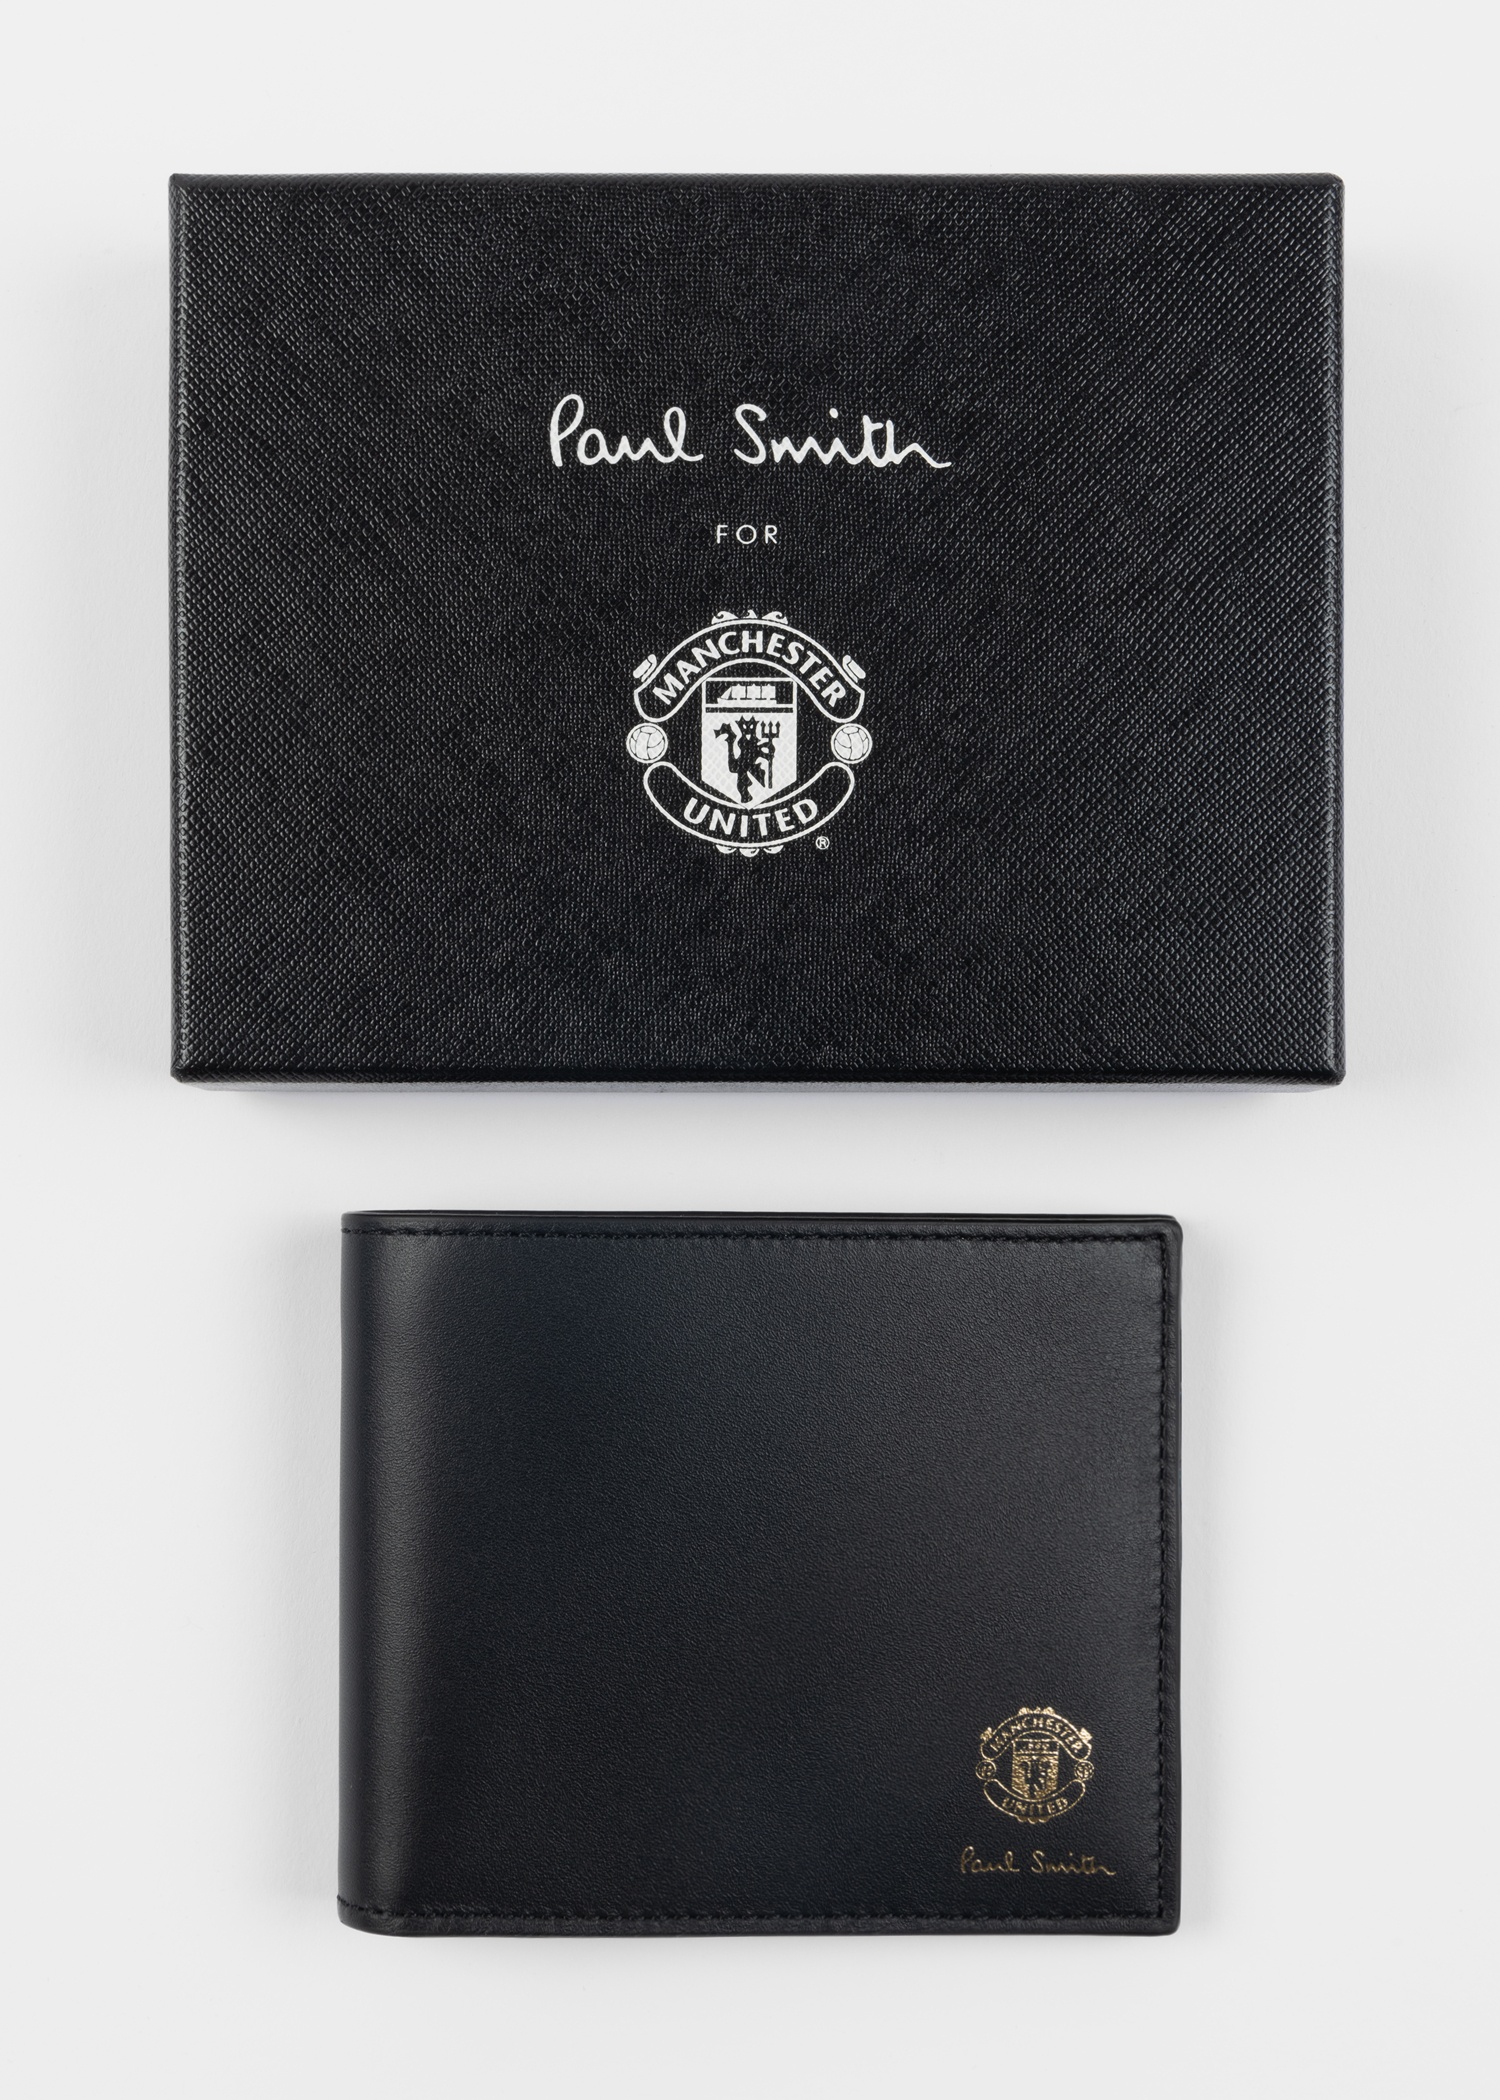 Paul Smith & Manchester United - Black 'Stadium' Billfold Wallet - 4